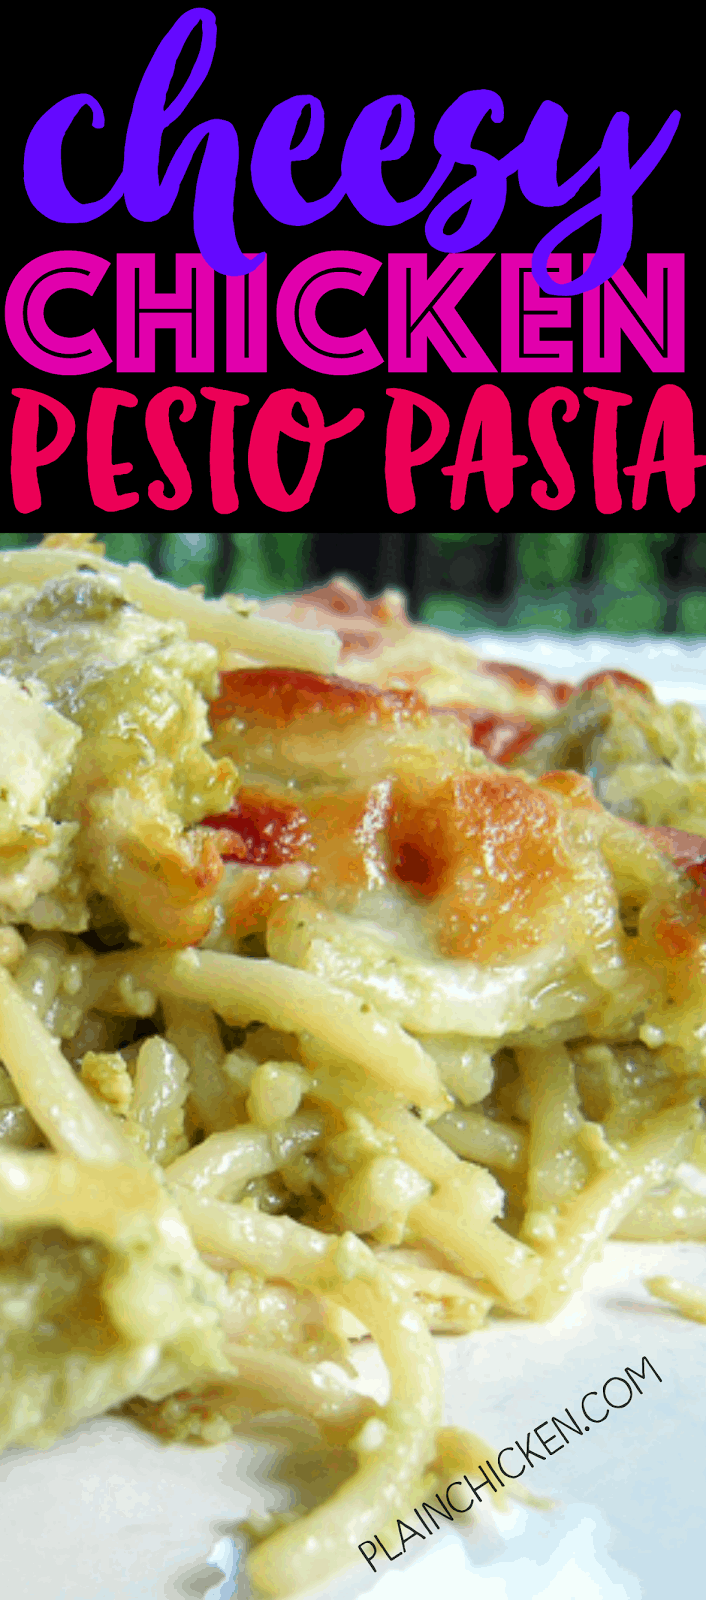 Cheesy Chicken Pesto Pasta - only 6 ingredients! Chicken, spaghetti, pesto, ricotta, mozzarella and parmesan - SO good! Great make ahead pasta casserole recipe - can freeze too!